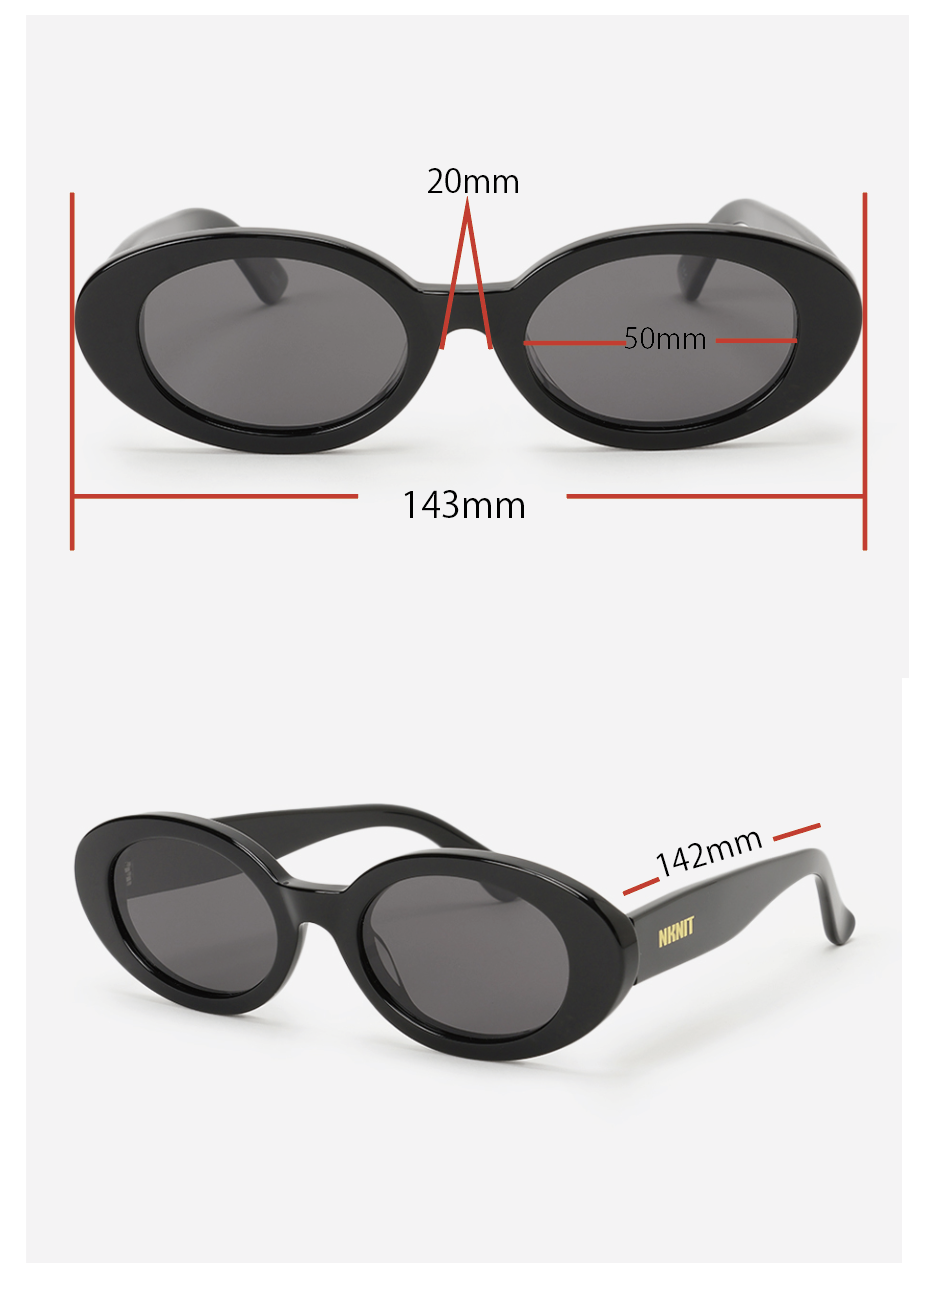 conalquipo.com - NKNIT round sunglasses 価格比較